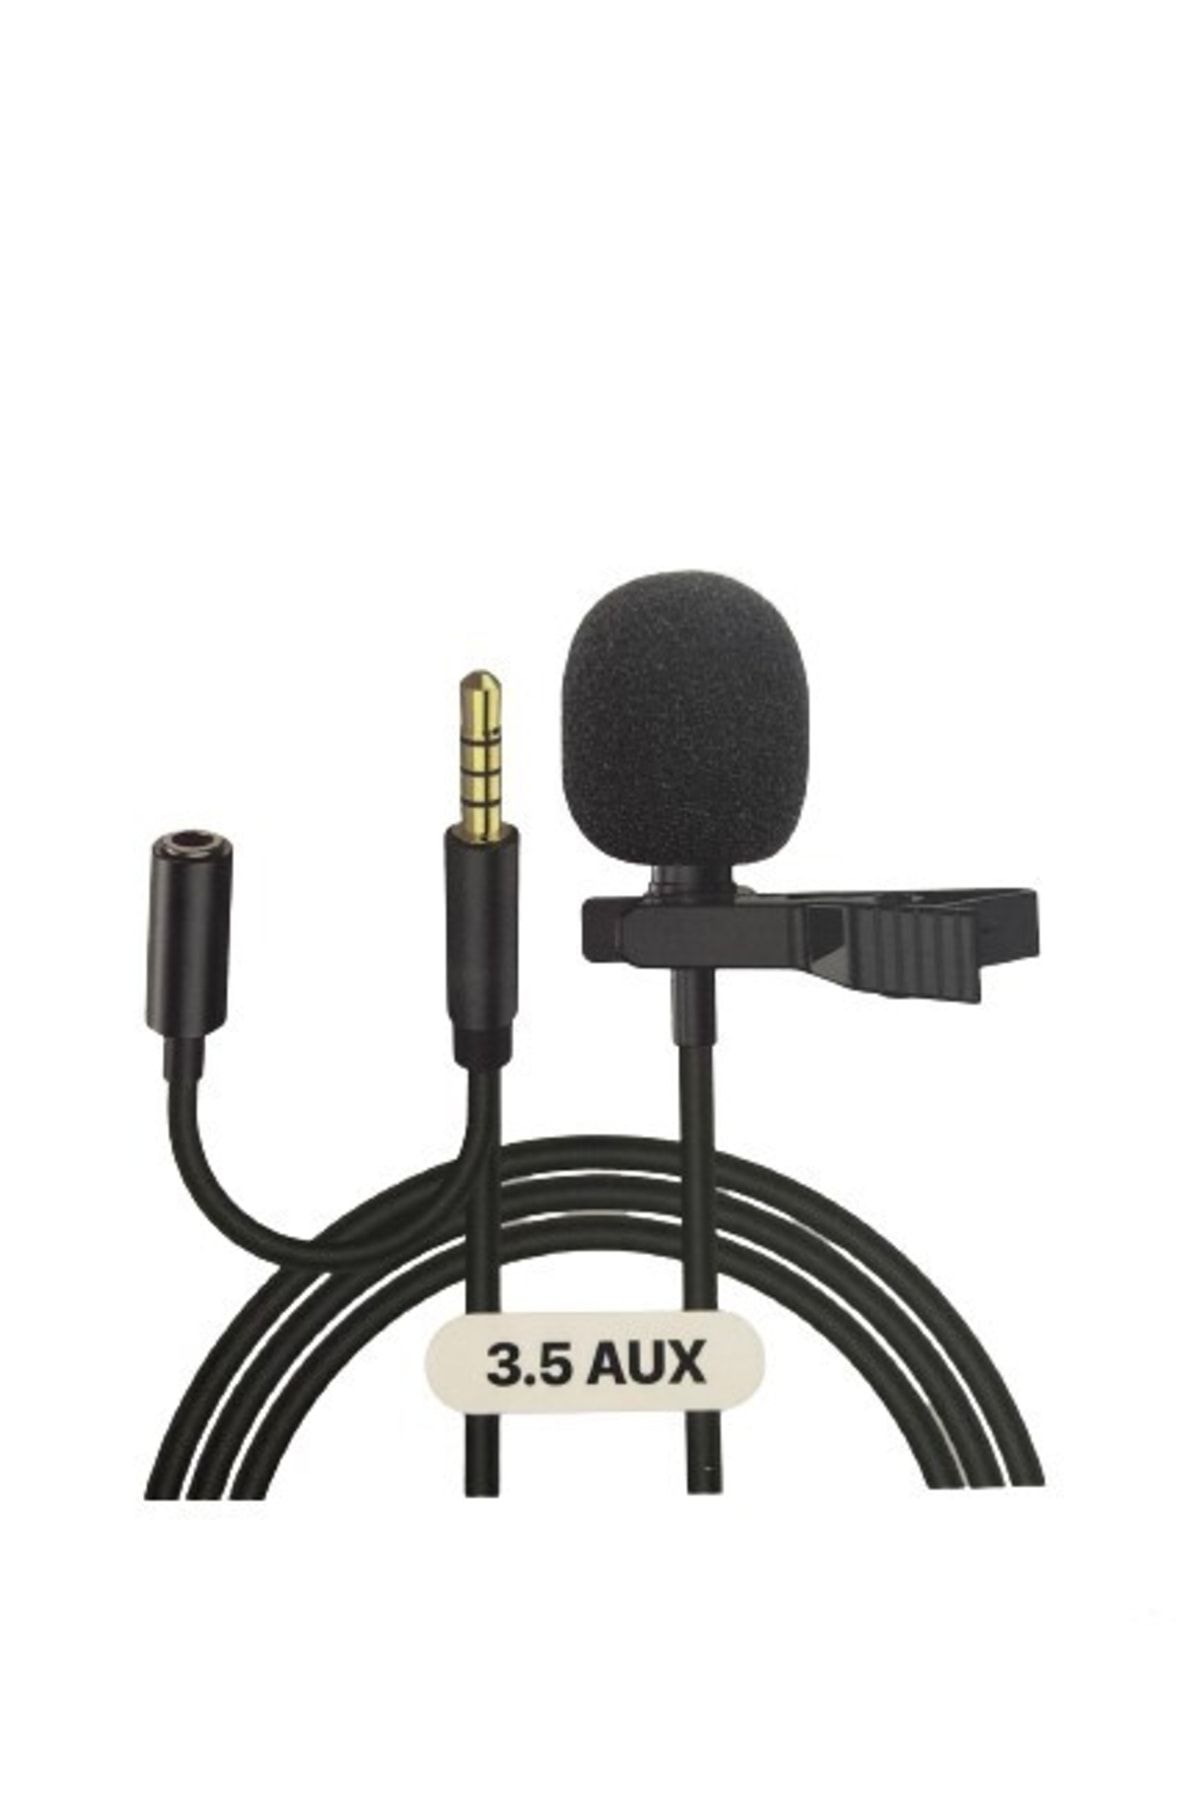 Snopy Yaka Mikrofonu 3.5mm Aux Jack 1.5 Metre Kablo Youtuber Yaka Mikrofonu Sn-mtk25